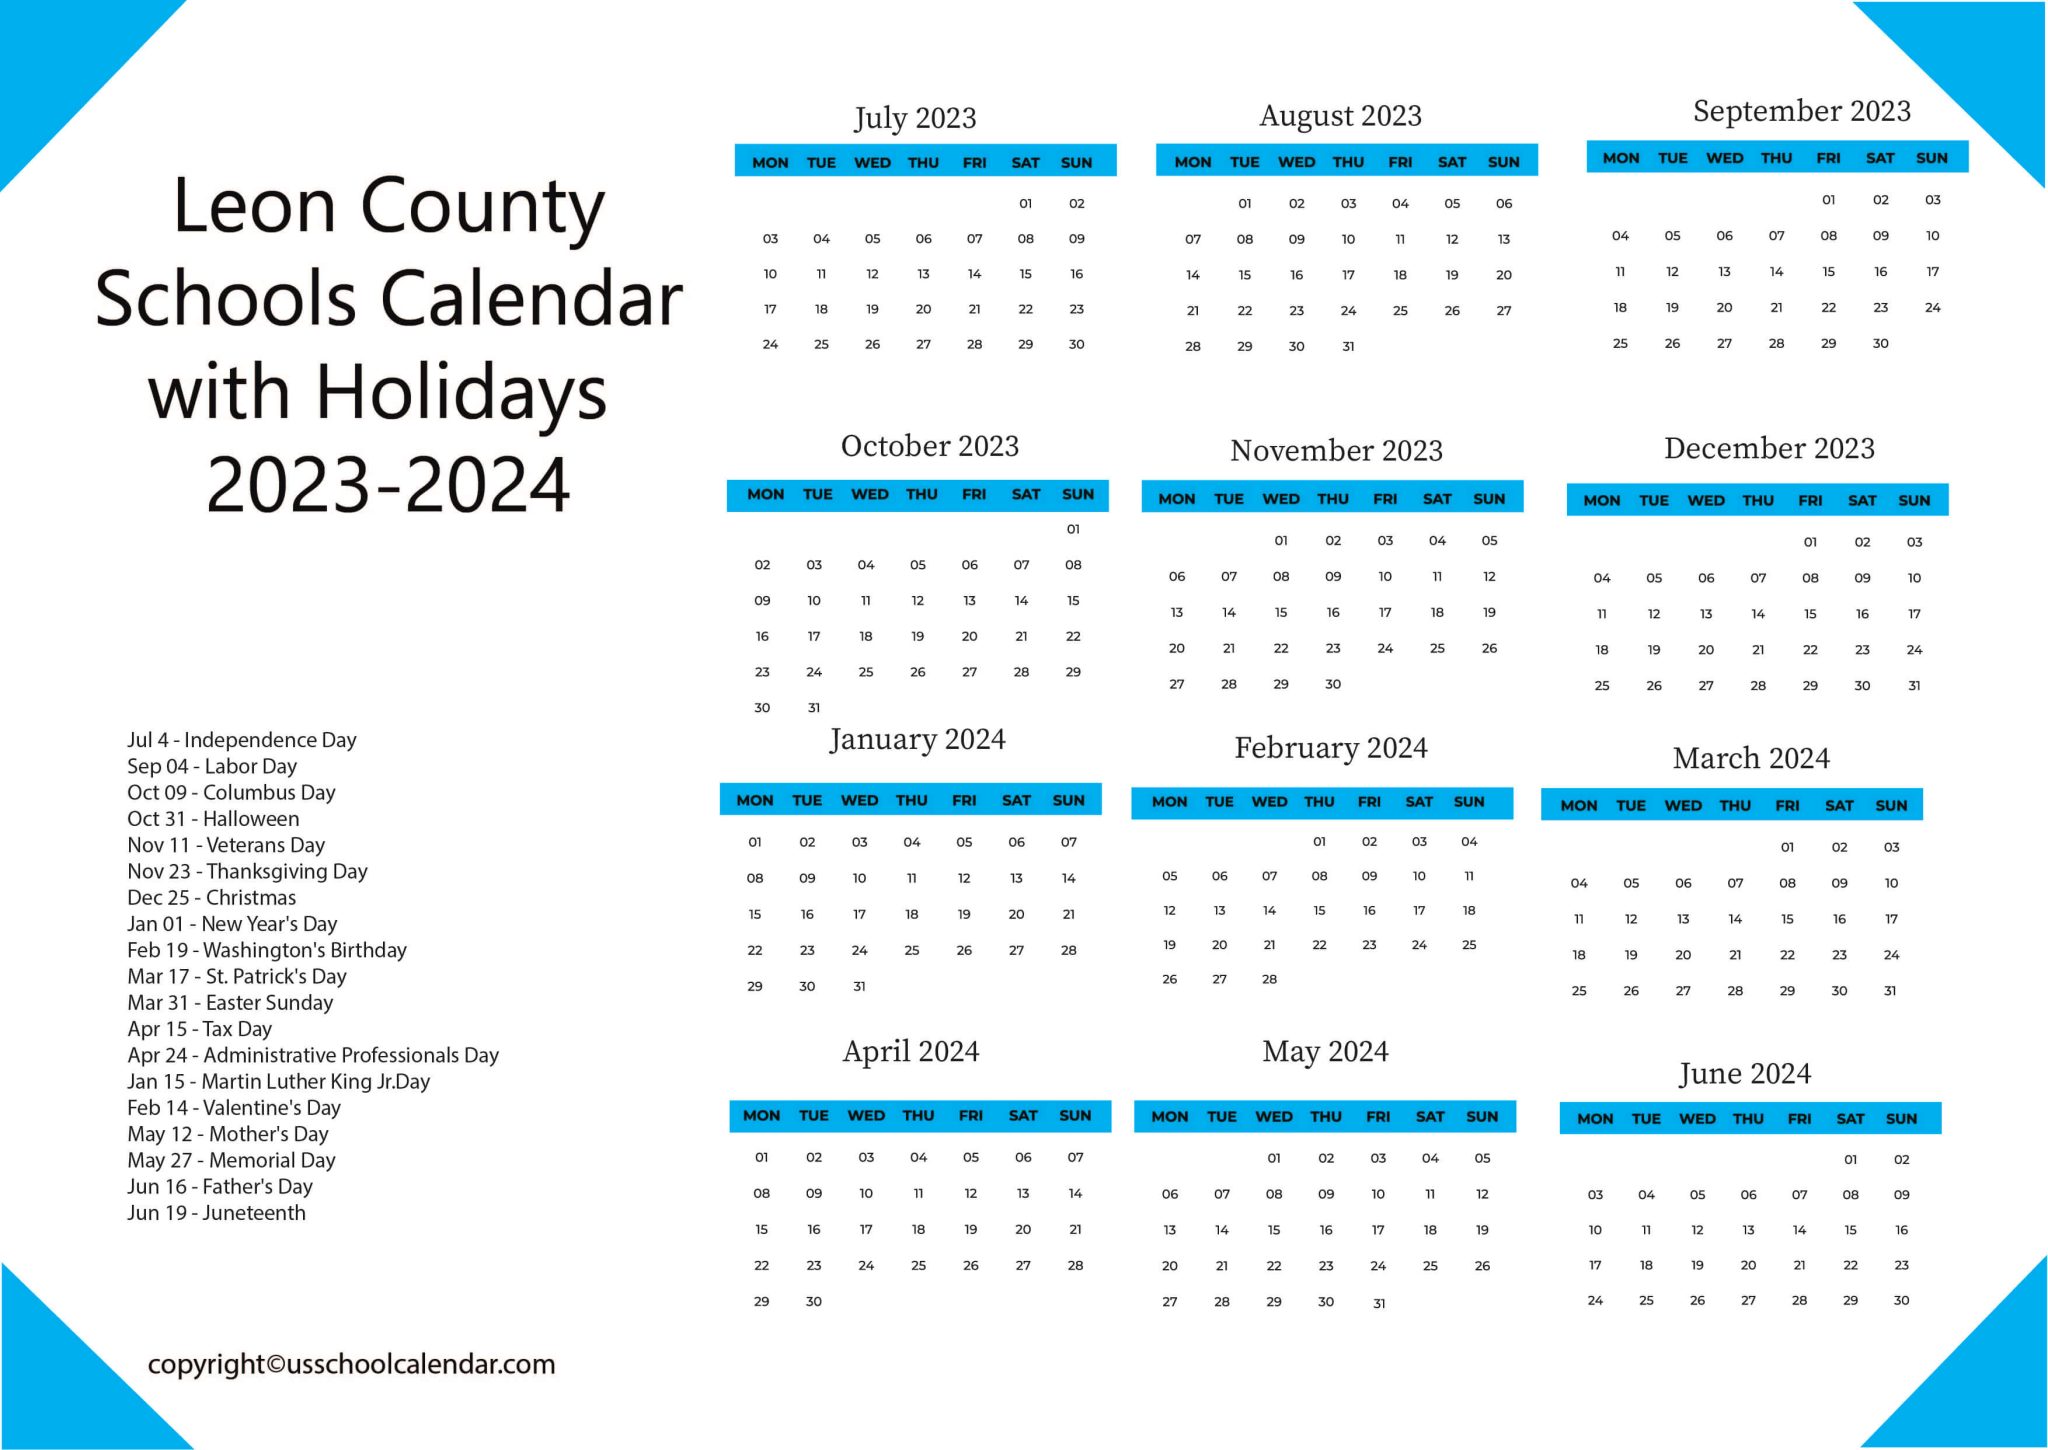 leon-county-schools-calendar-with-holidays-2023-2024